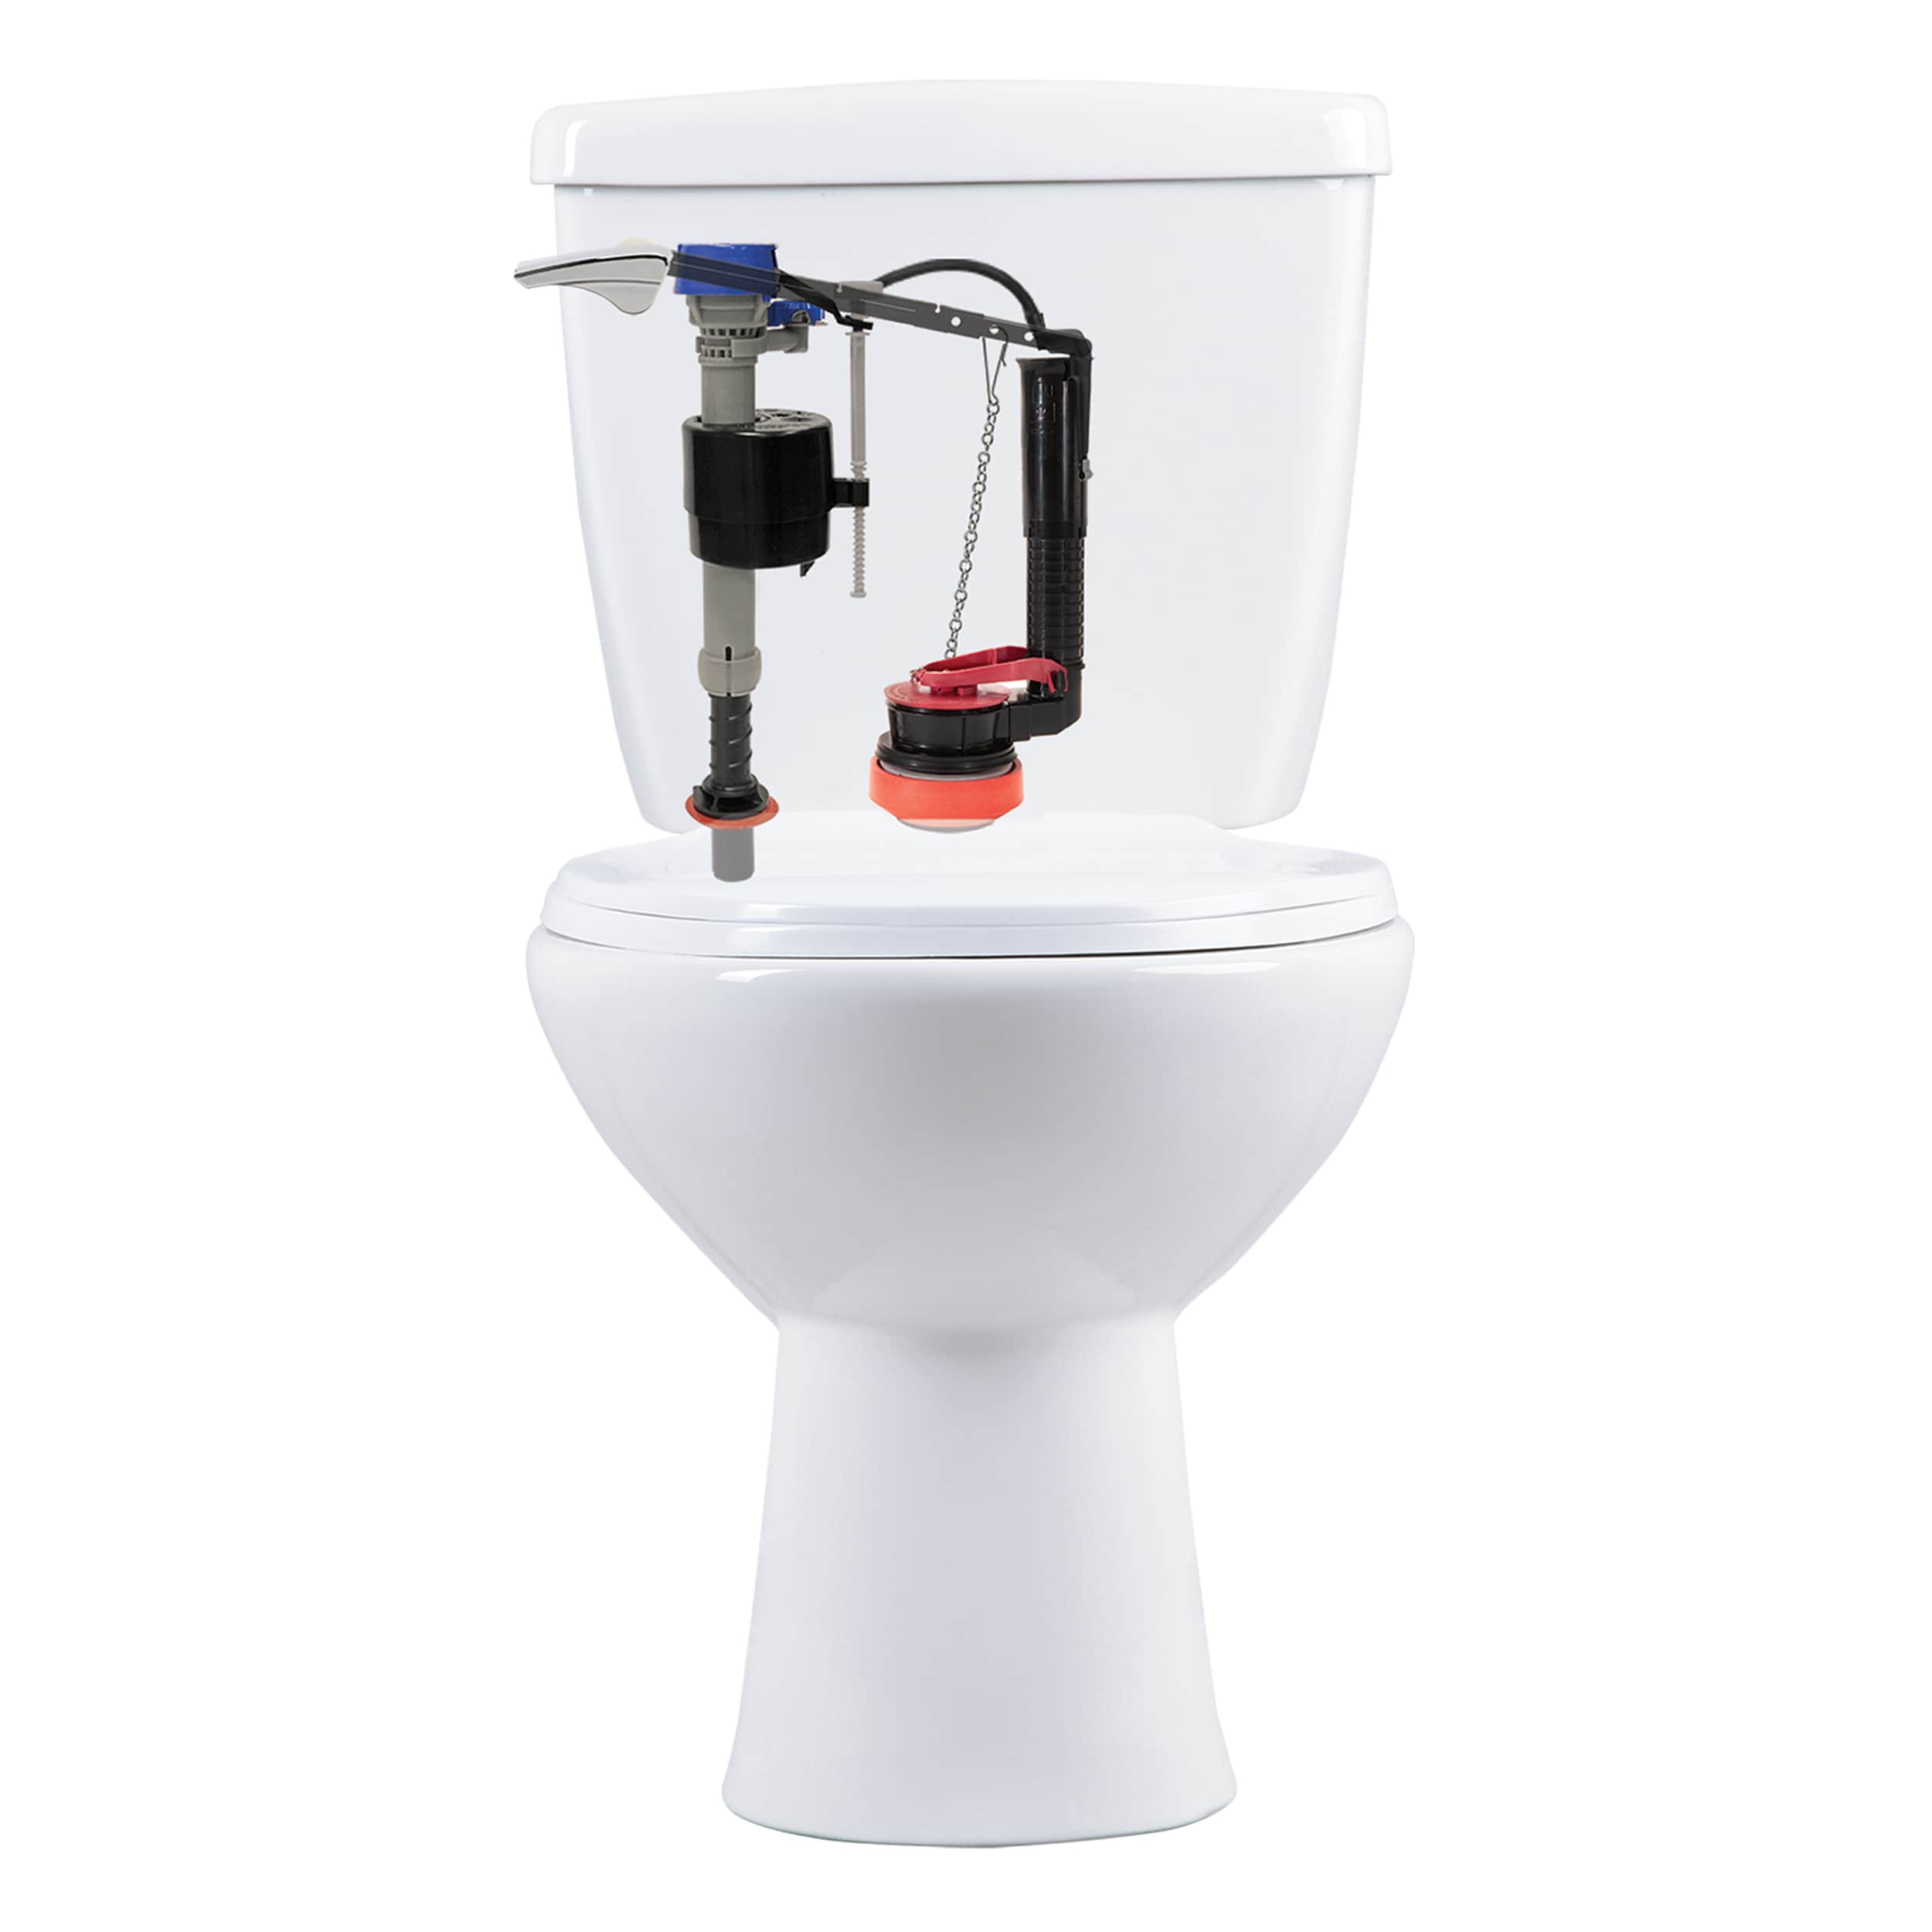 Fluidmaster PerforMAX Universal 2 in High Performance Toilet Repair Kit